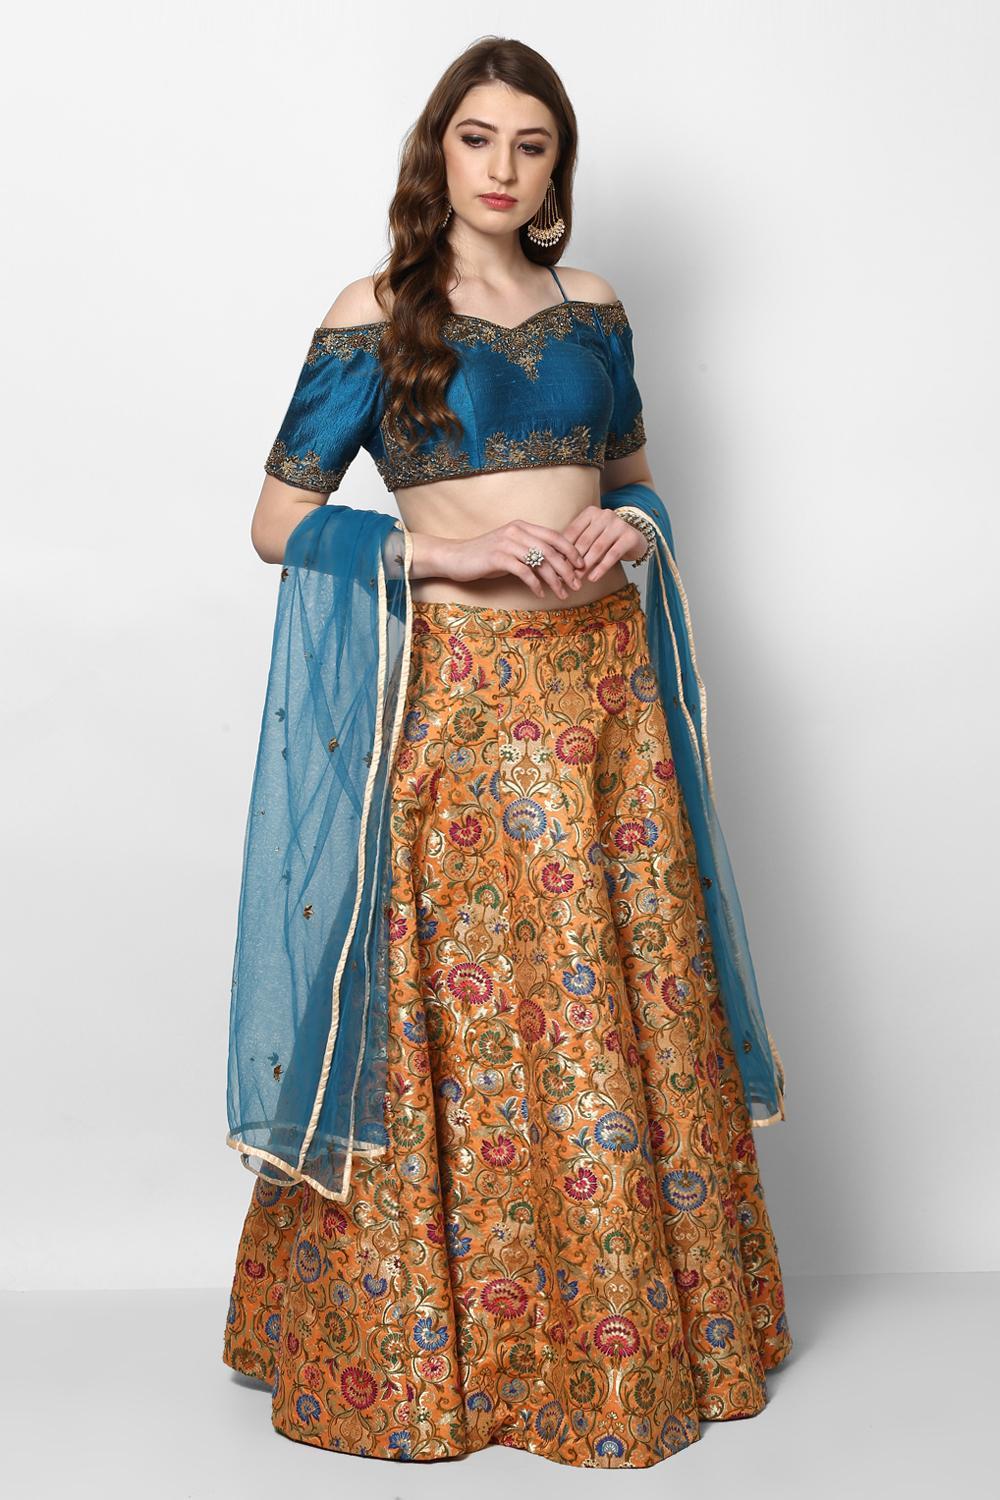 Indian Dress for Women Girl Lehenga Choli Set Tops Blouse Skirt Shawl  Embroidery Bollywood Performance Pakistan Nepal Clothing - AliExpress